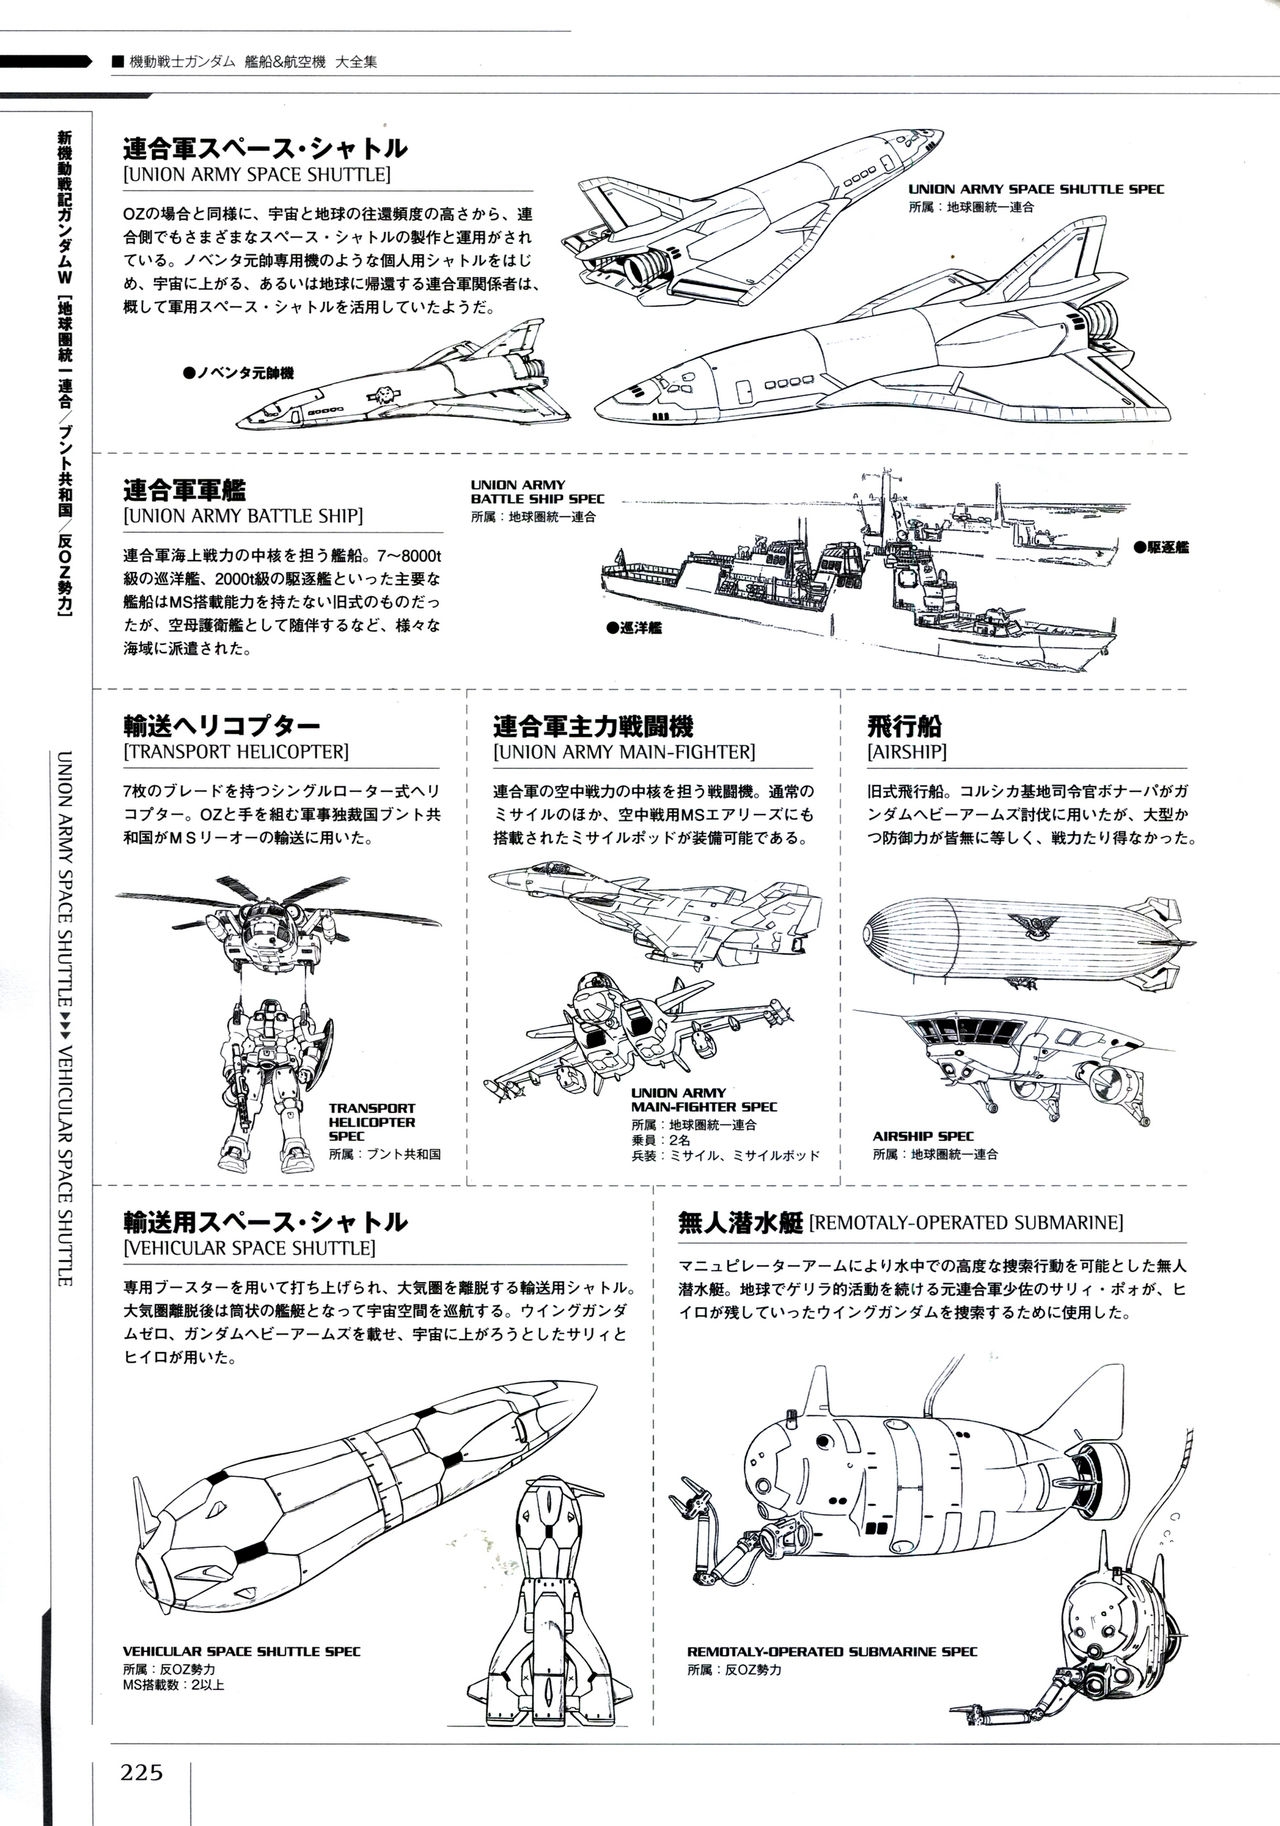 Mobile Suit Gundam - Ship & Aerospace Plane Encyclopedia - Revised Edition 230